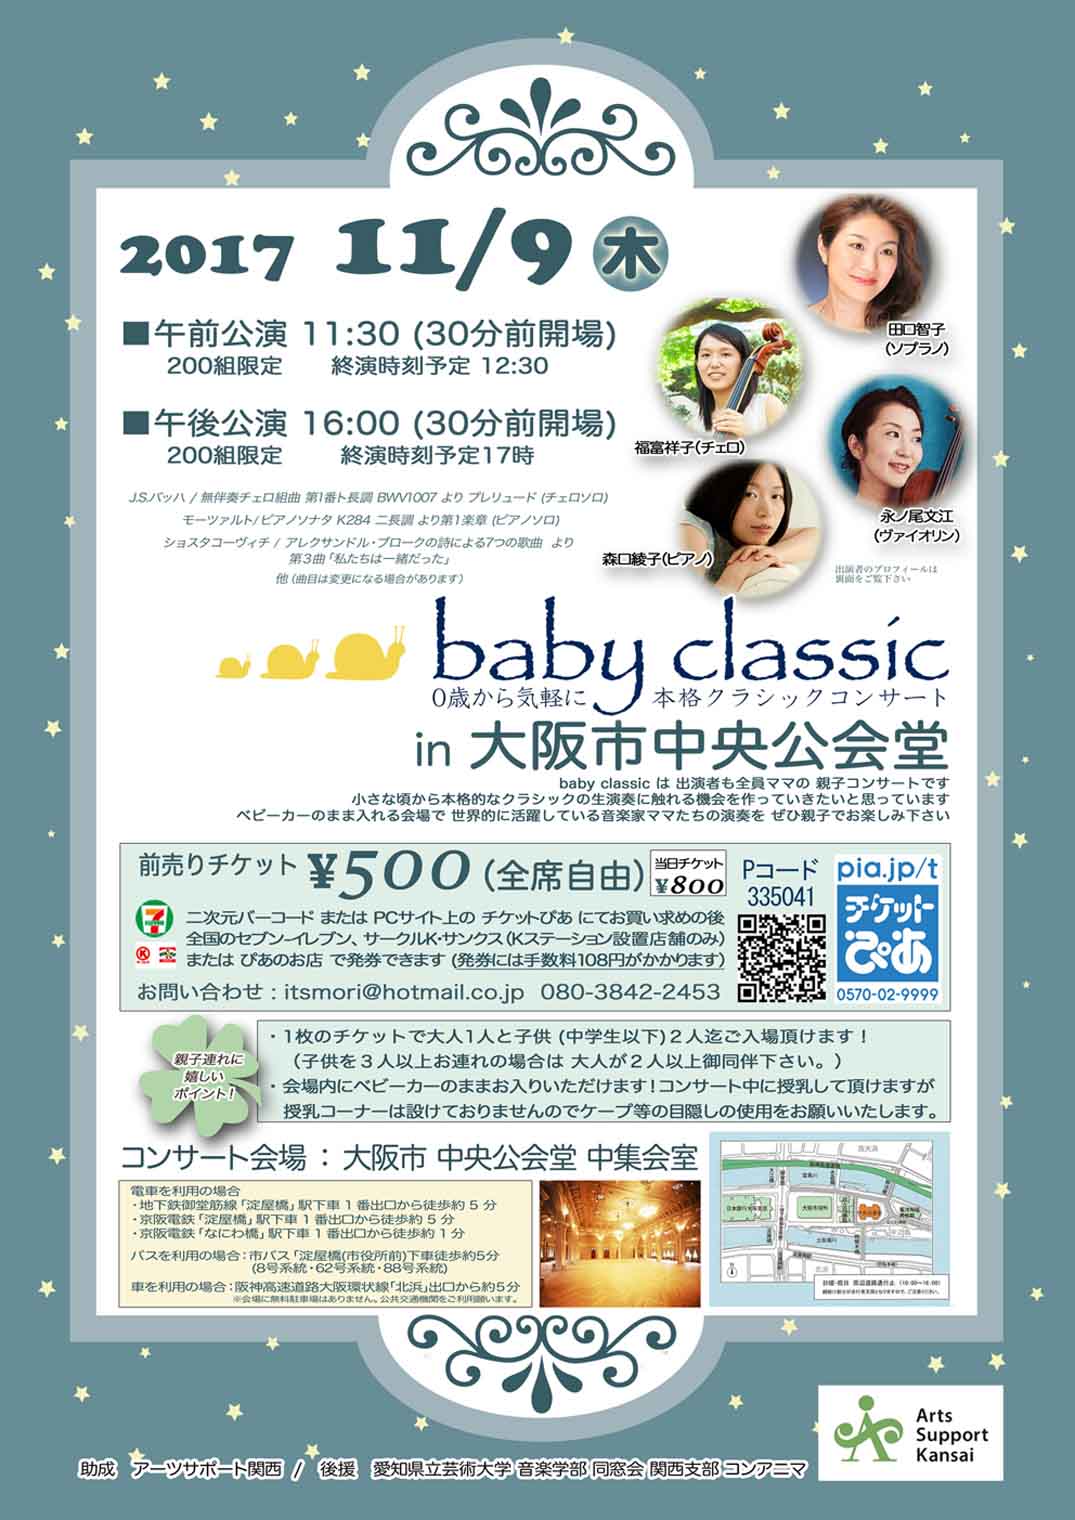 baby classic in 大阪市中央公会堂